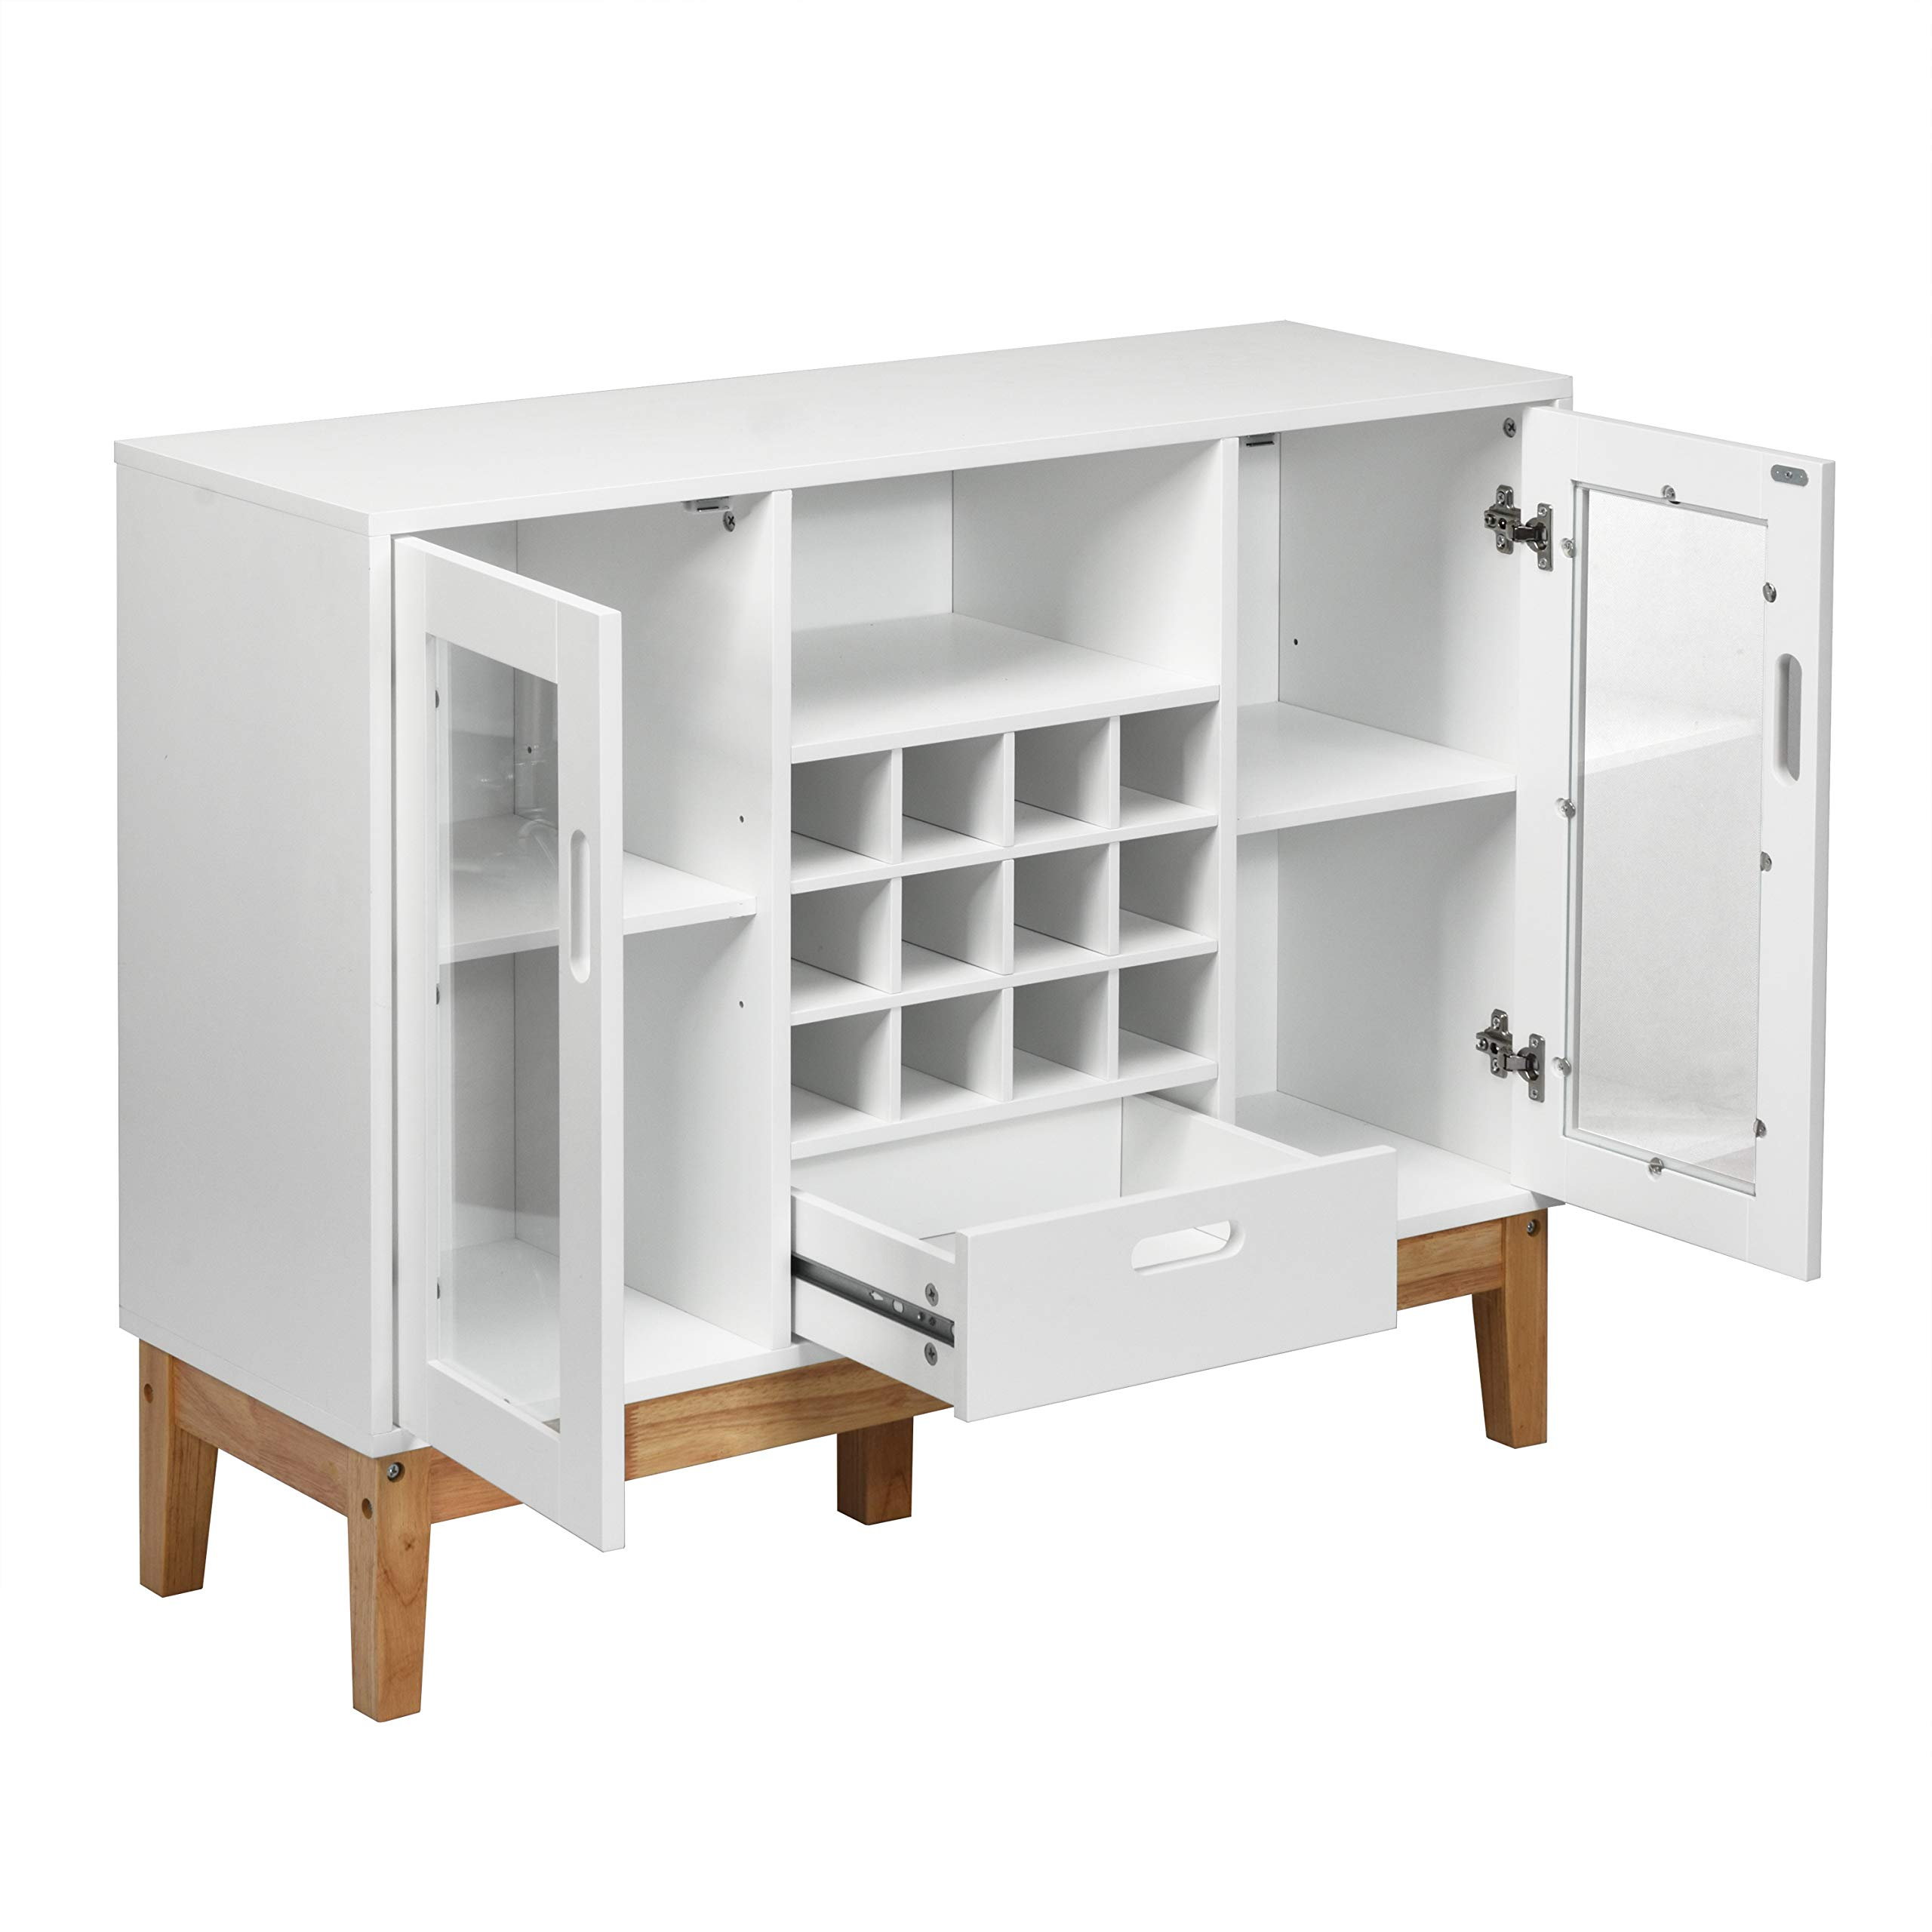 Giantex Buffet Sideboard, Wood Kitchen Server, Storage Cupboard